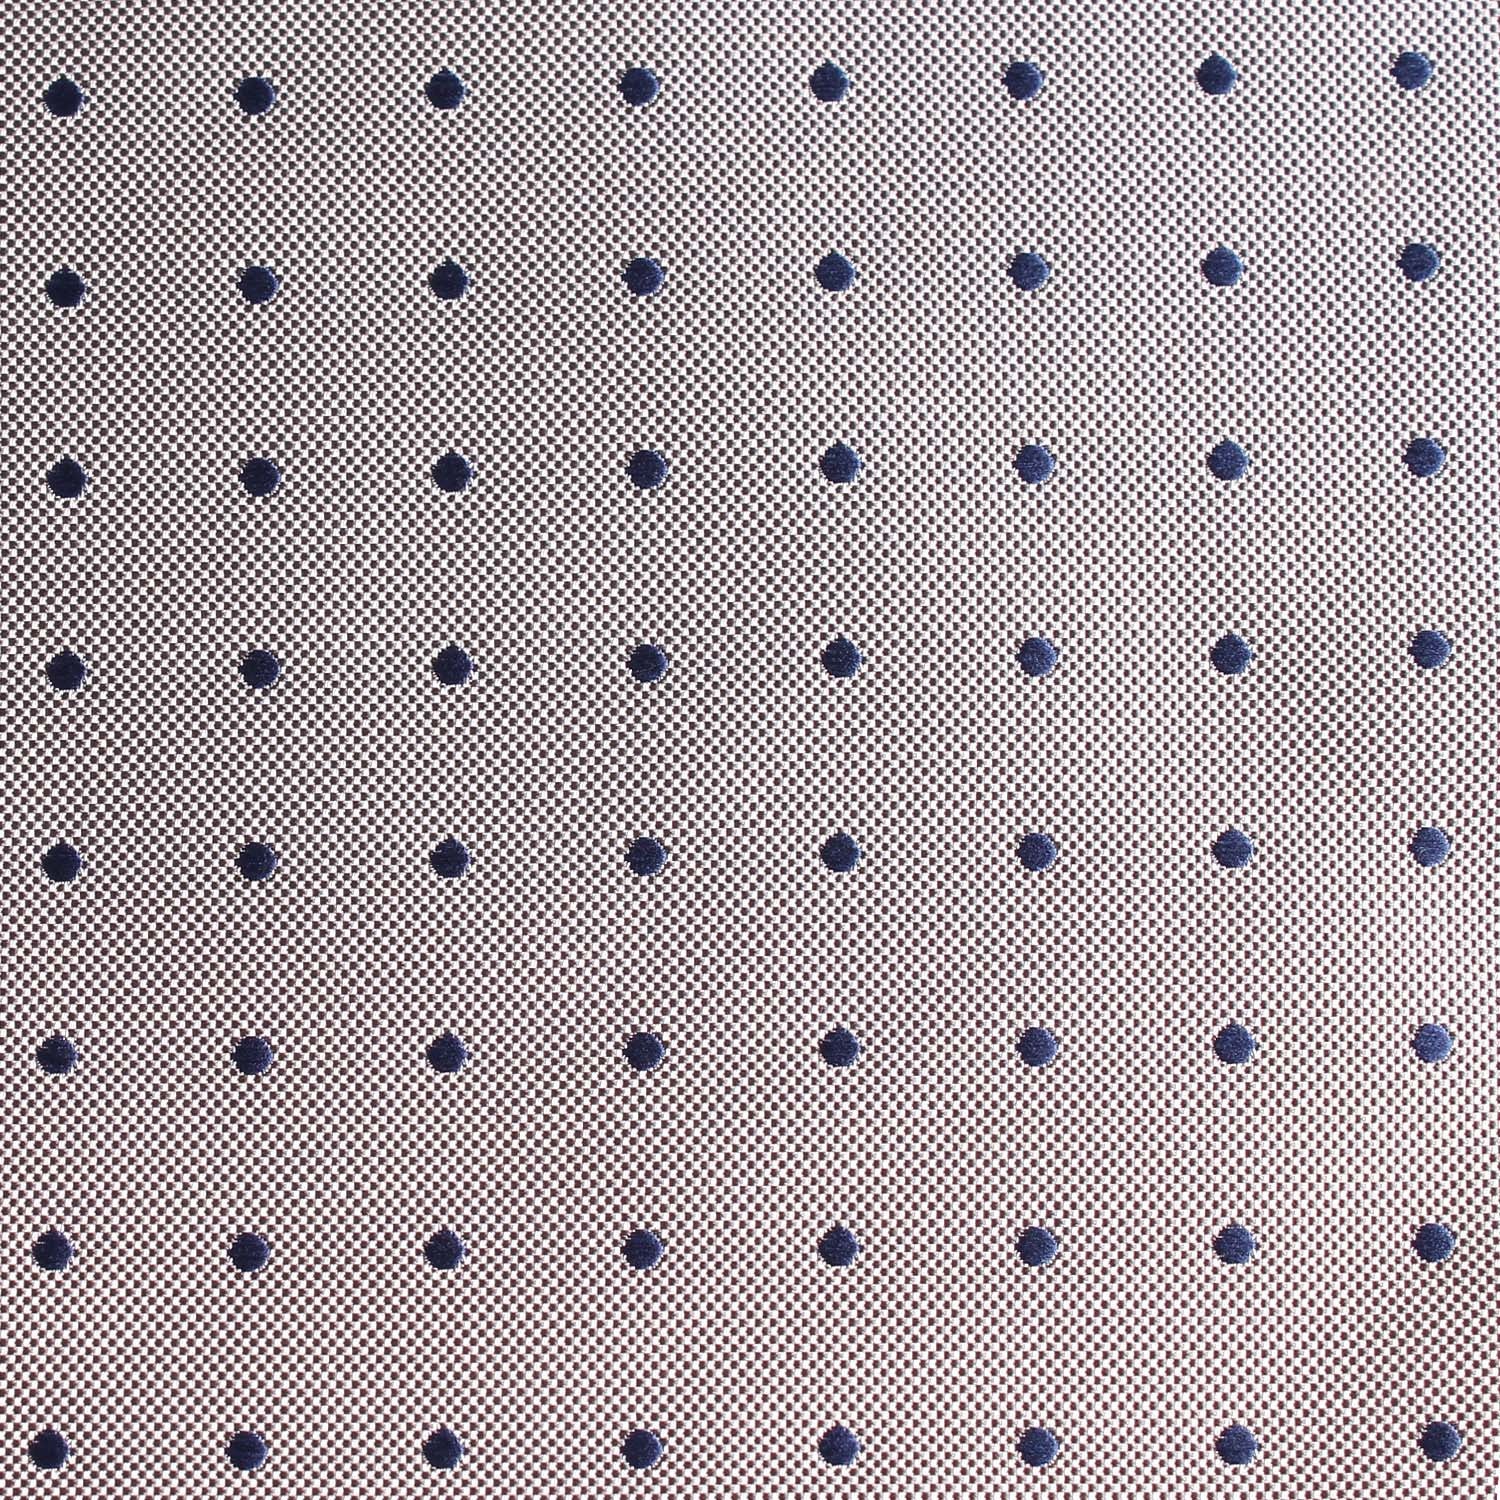 Grey with Oxford Navy Blue Polka Dots Fabric Skinny Tie M117